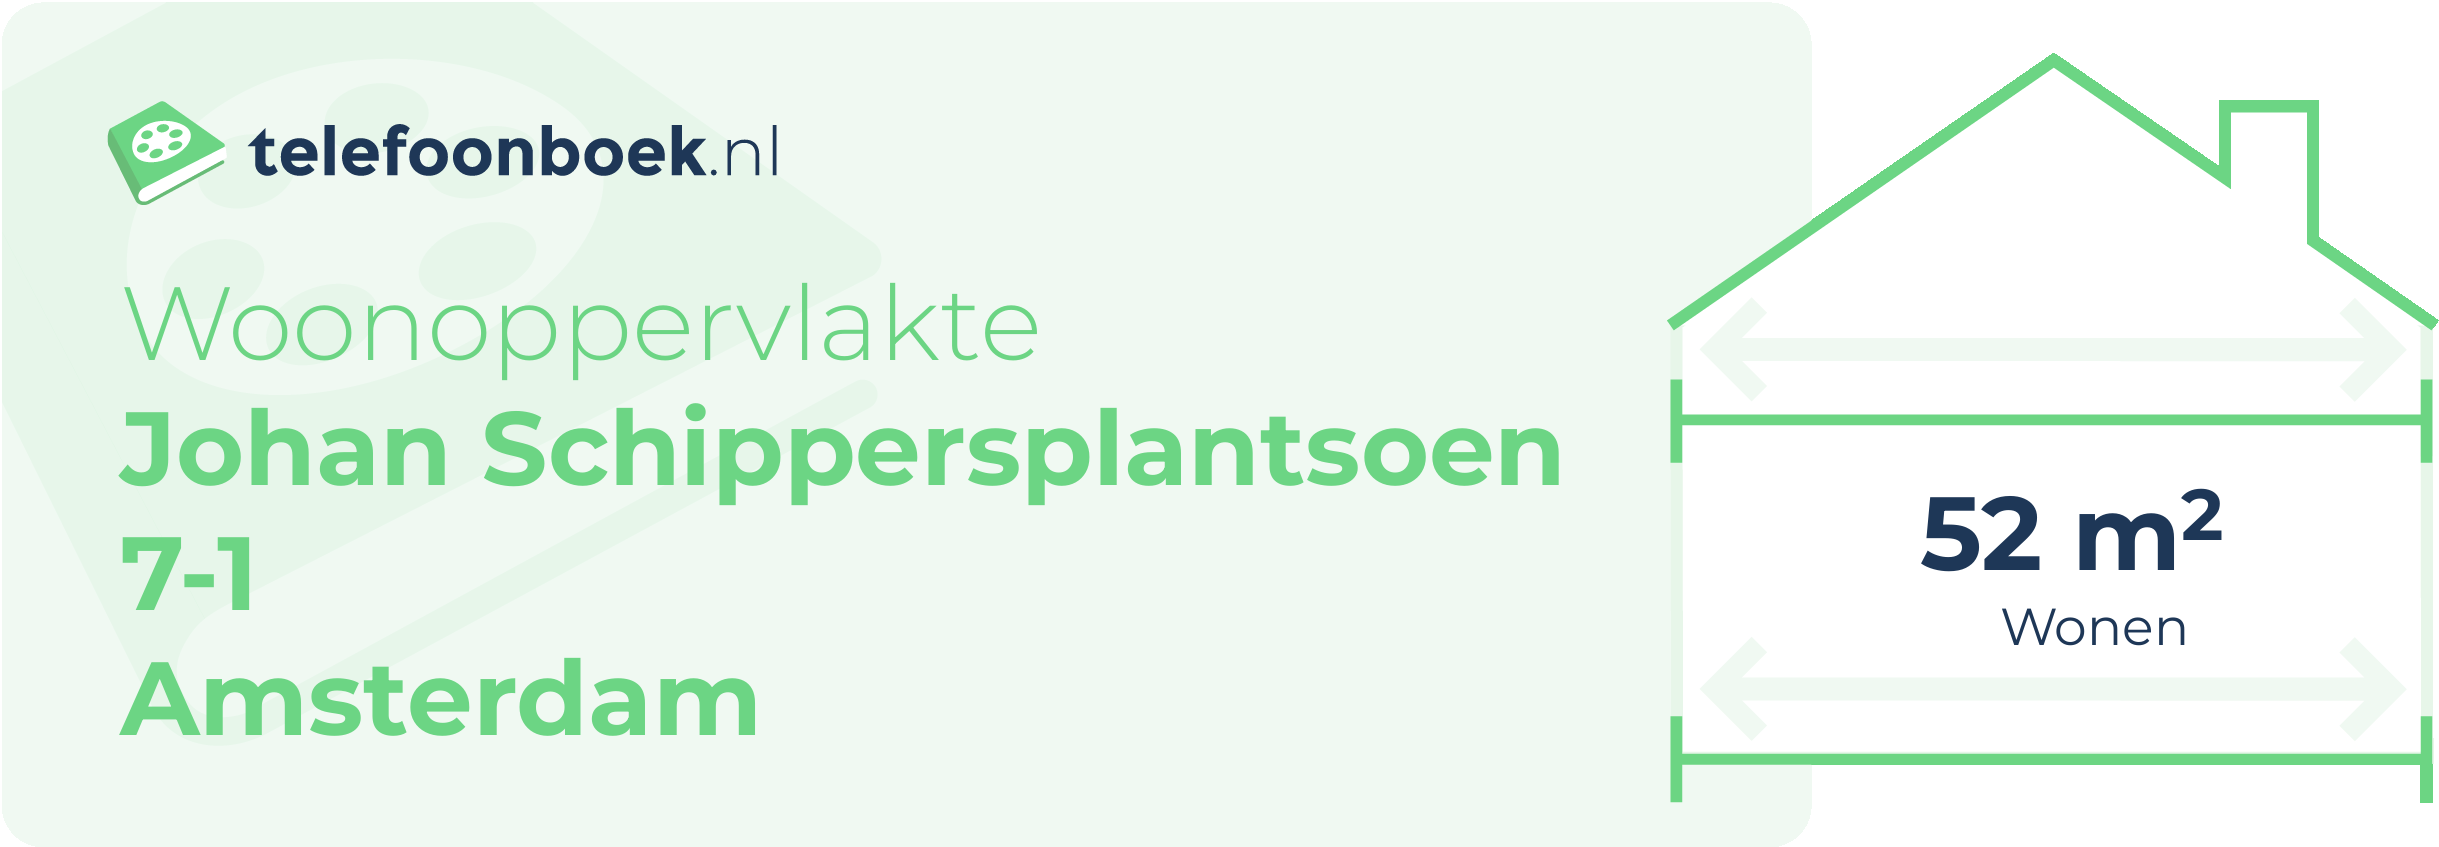 Woonoppervlakte Johan Schippersplantsoen 7-1 Amsterdam